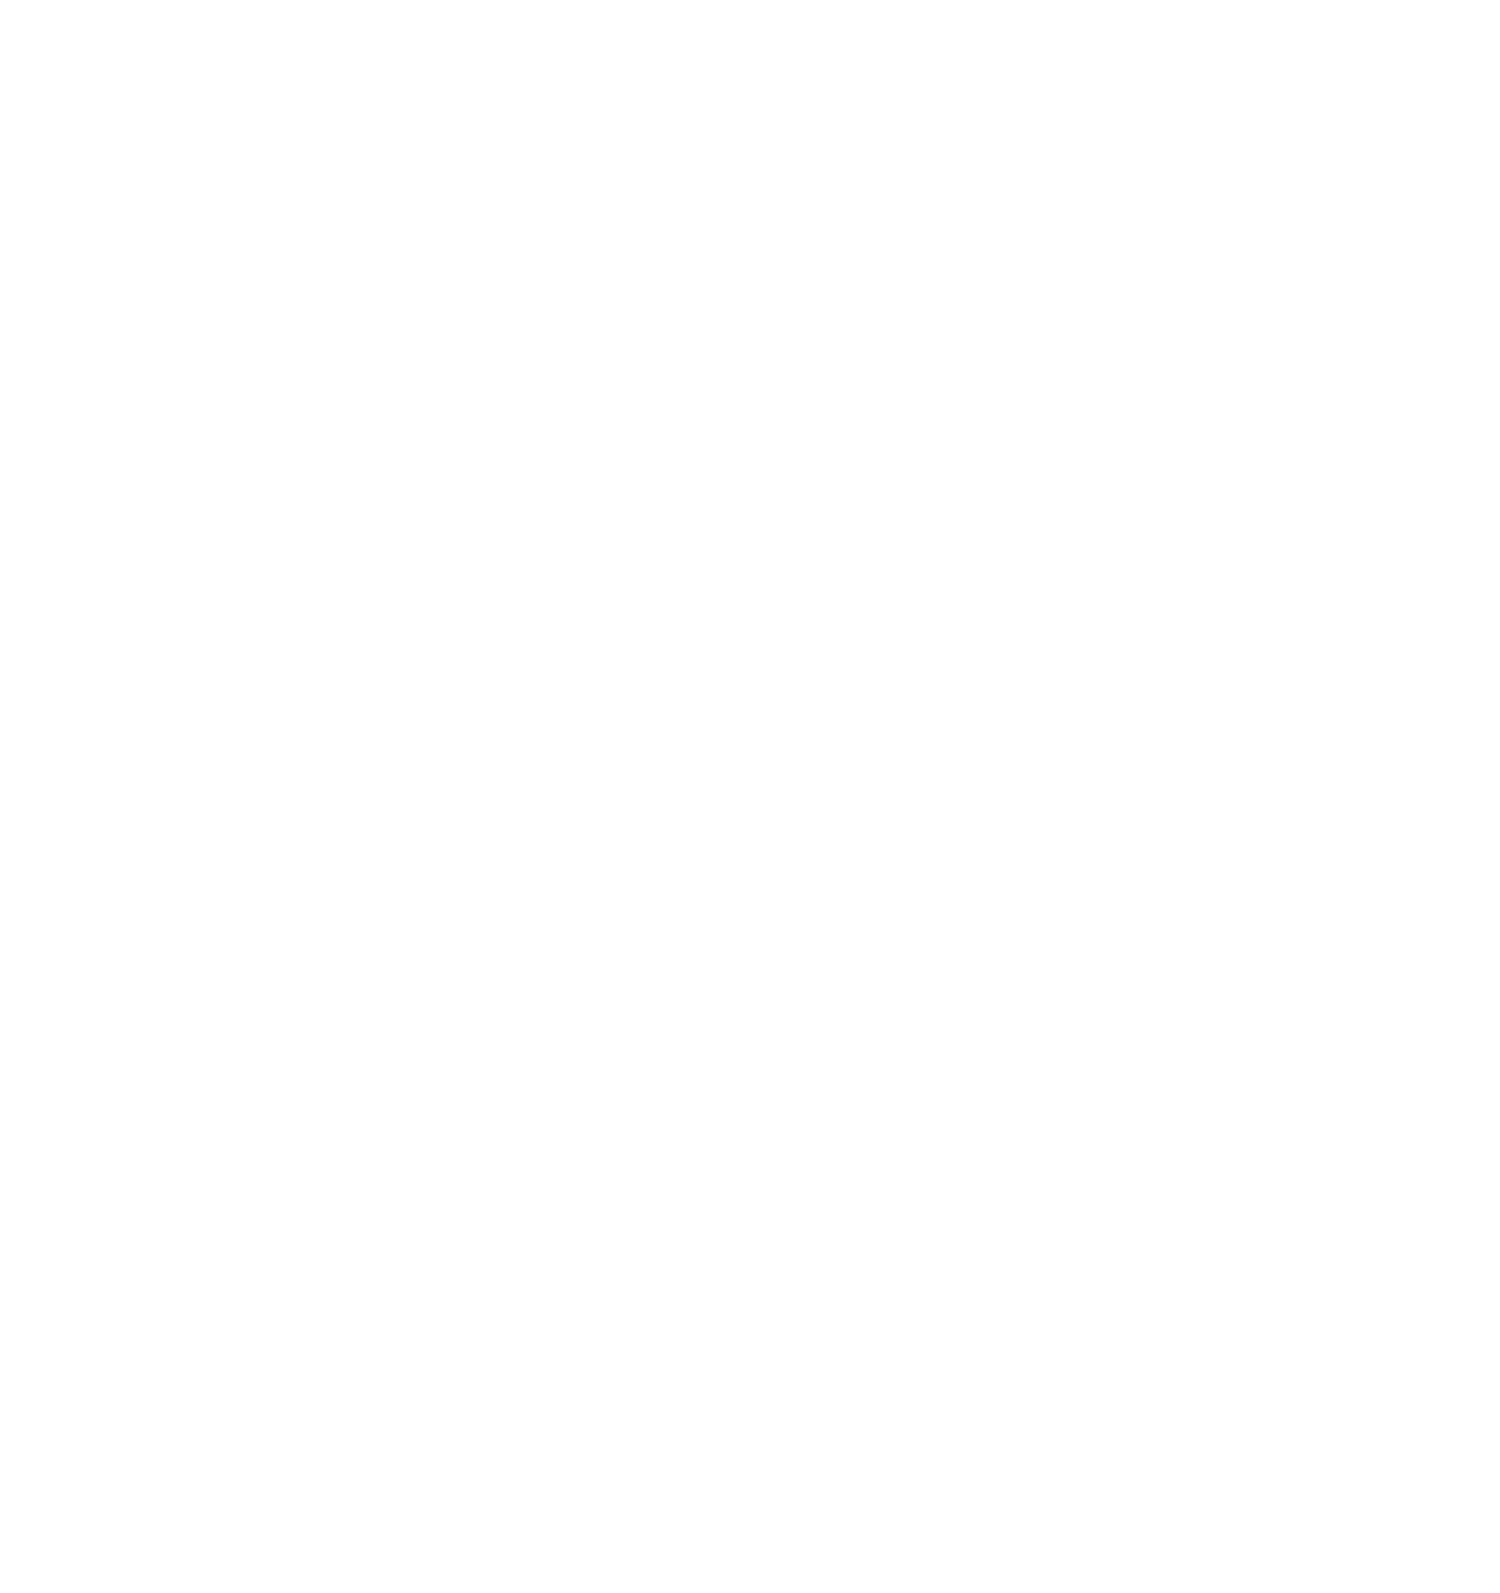 Kendall & Davis Logo